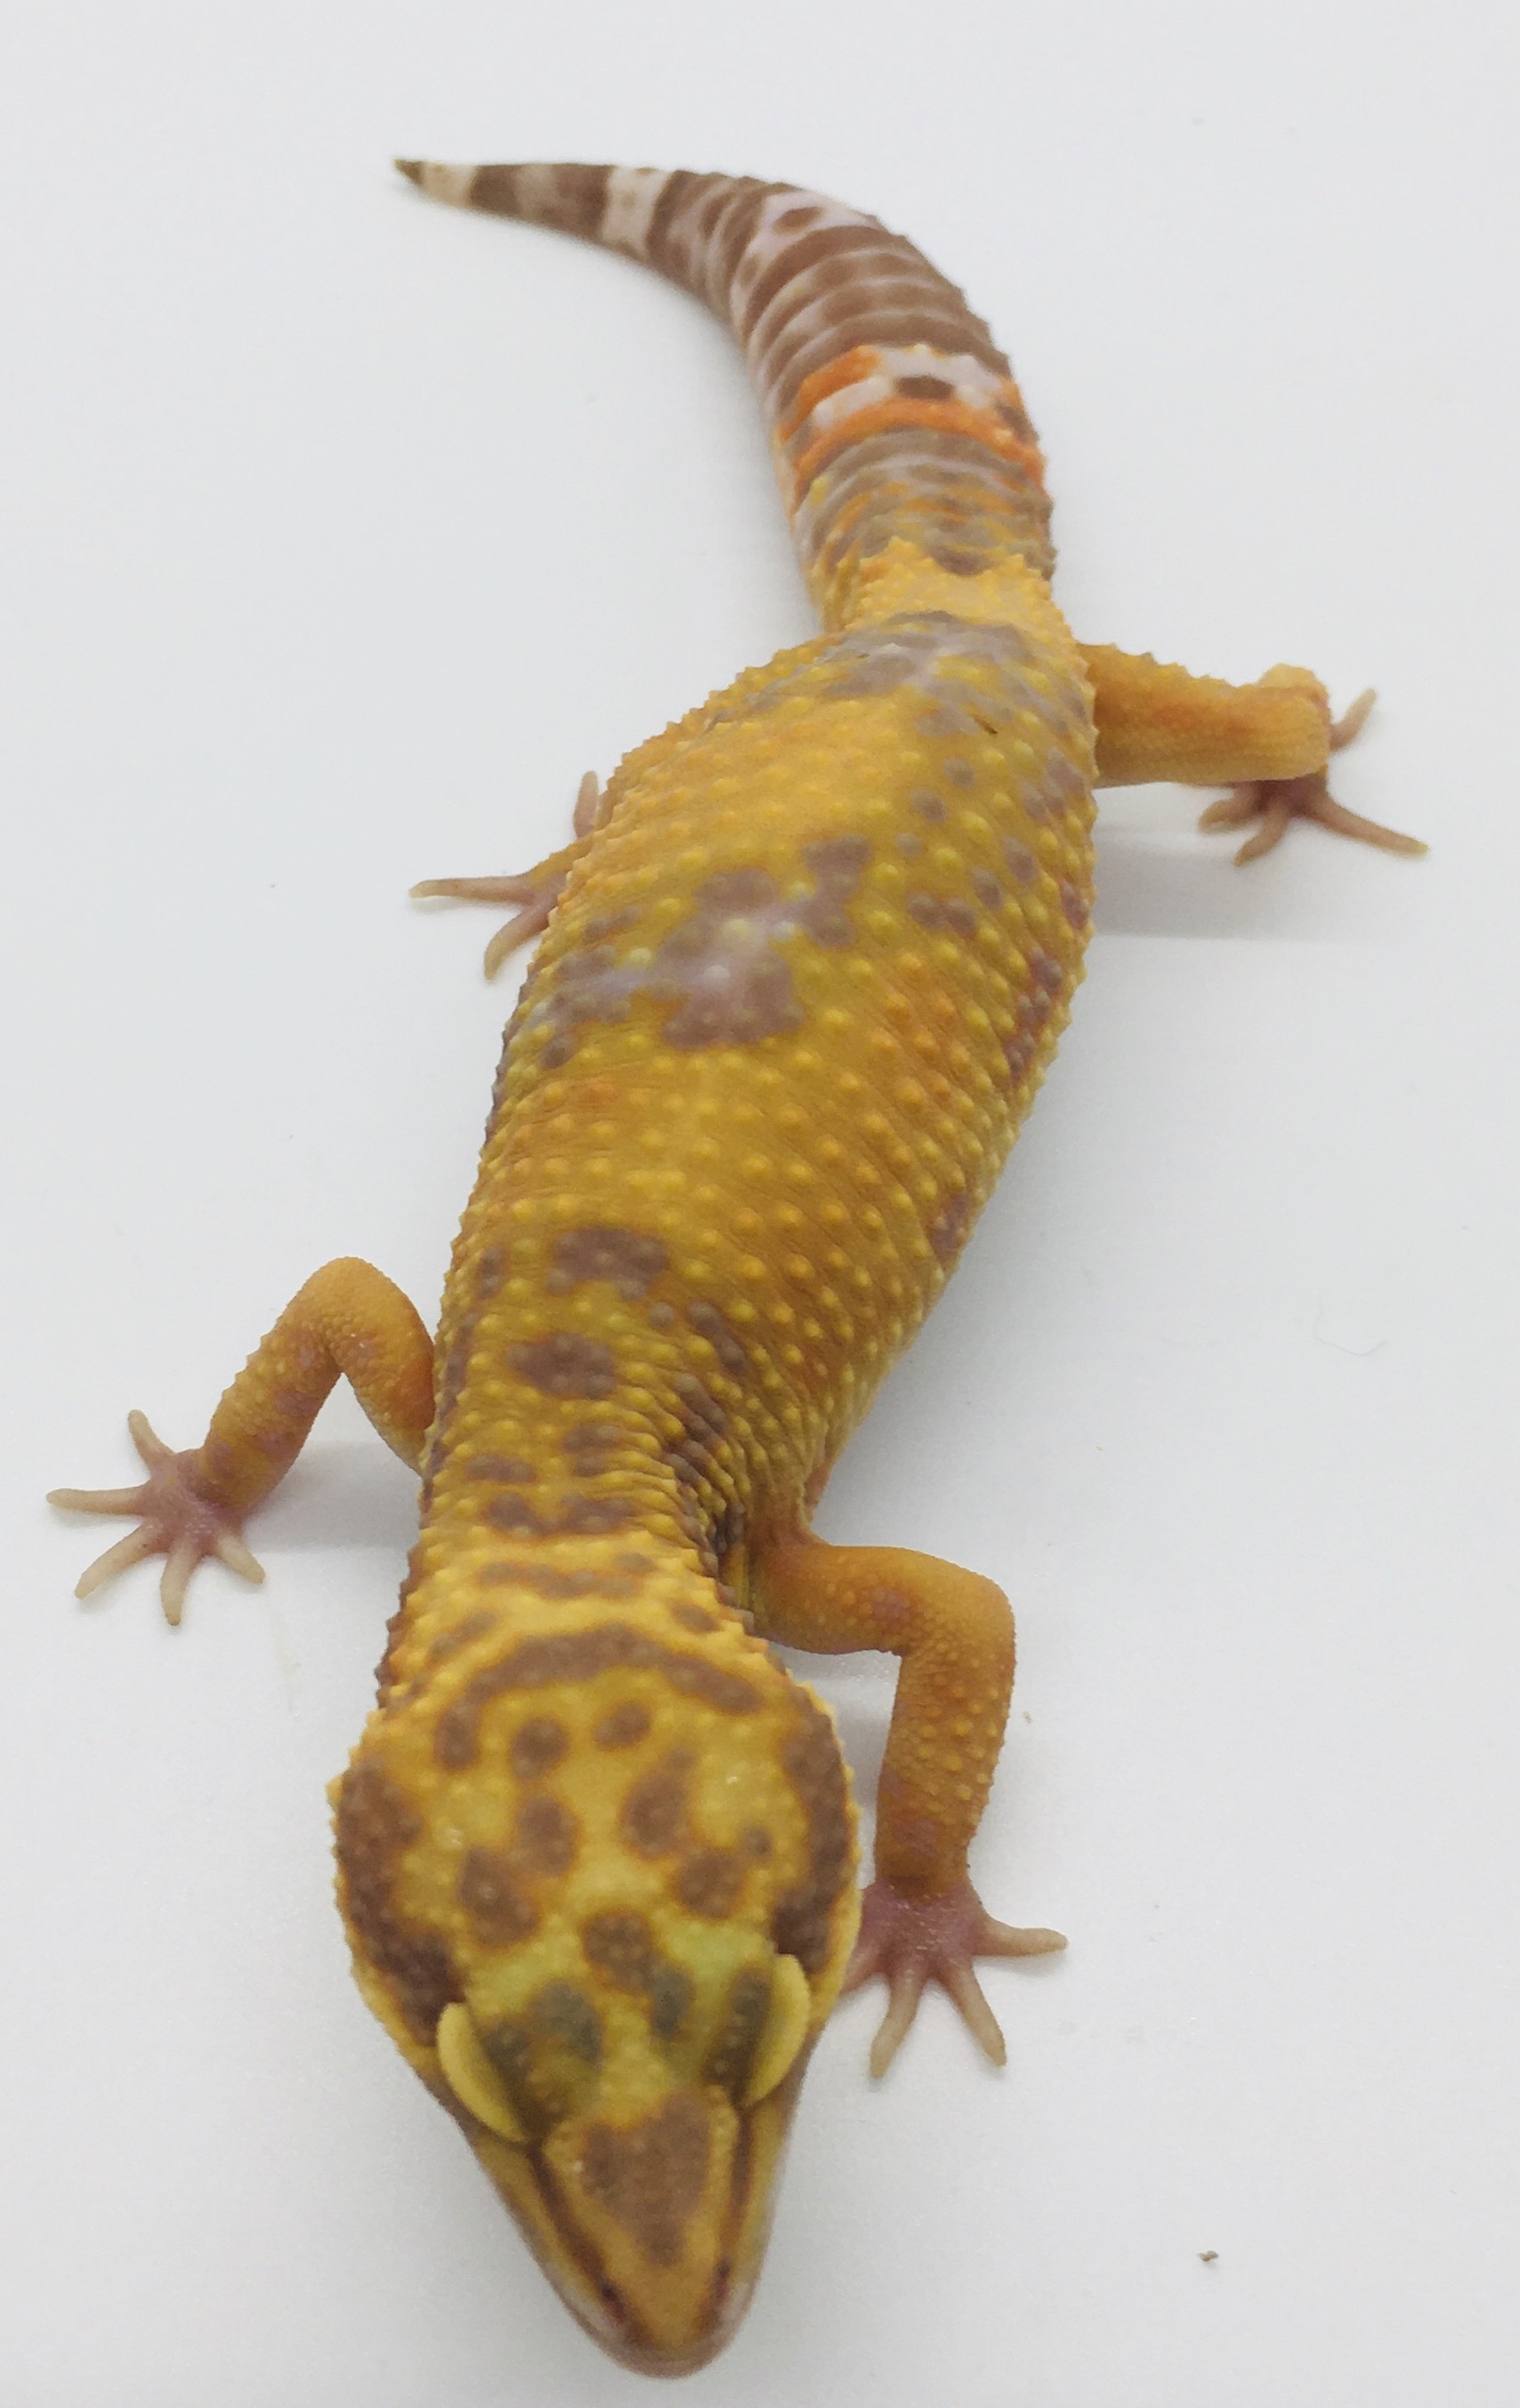 Blood Emerine Leopard Gecko by Moonbeam Geckos